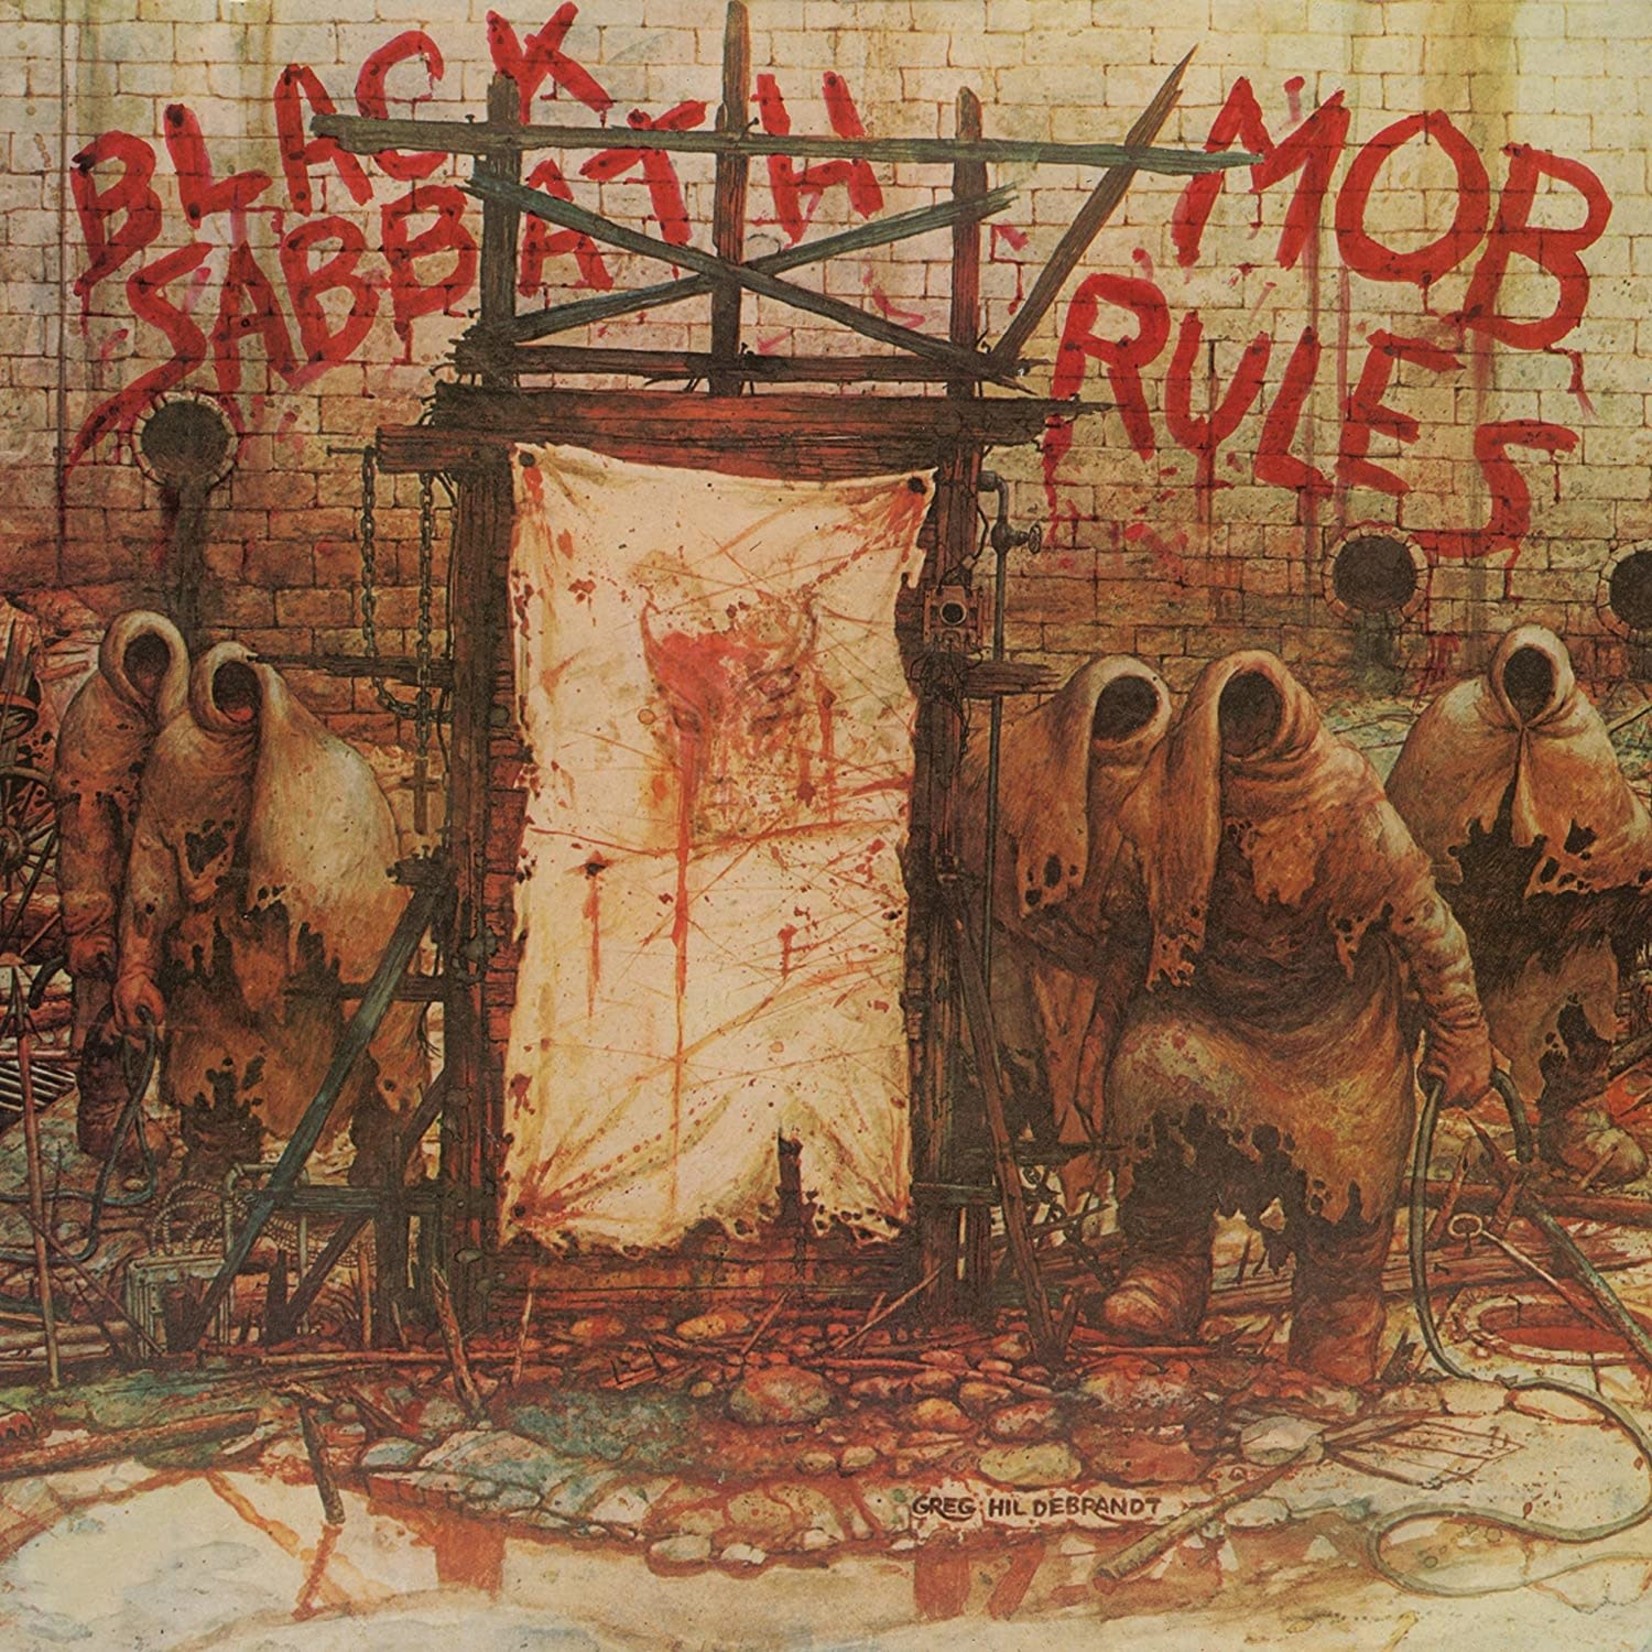 [New] Black Sabbath - Mob Rules (2LP, deluxe edition)